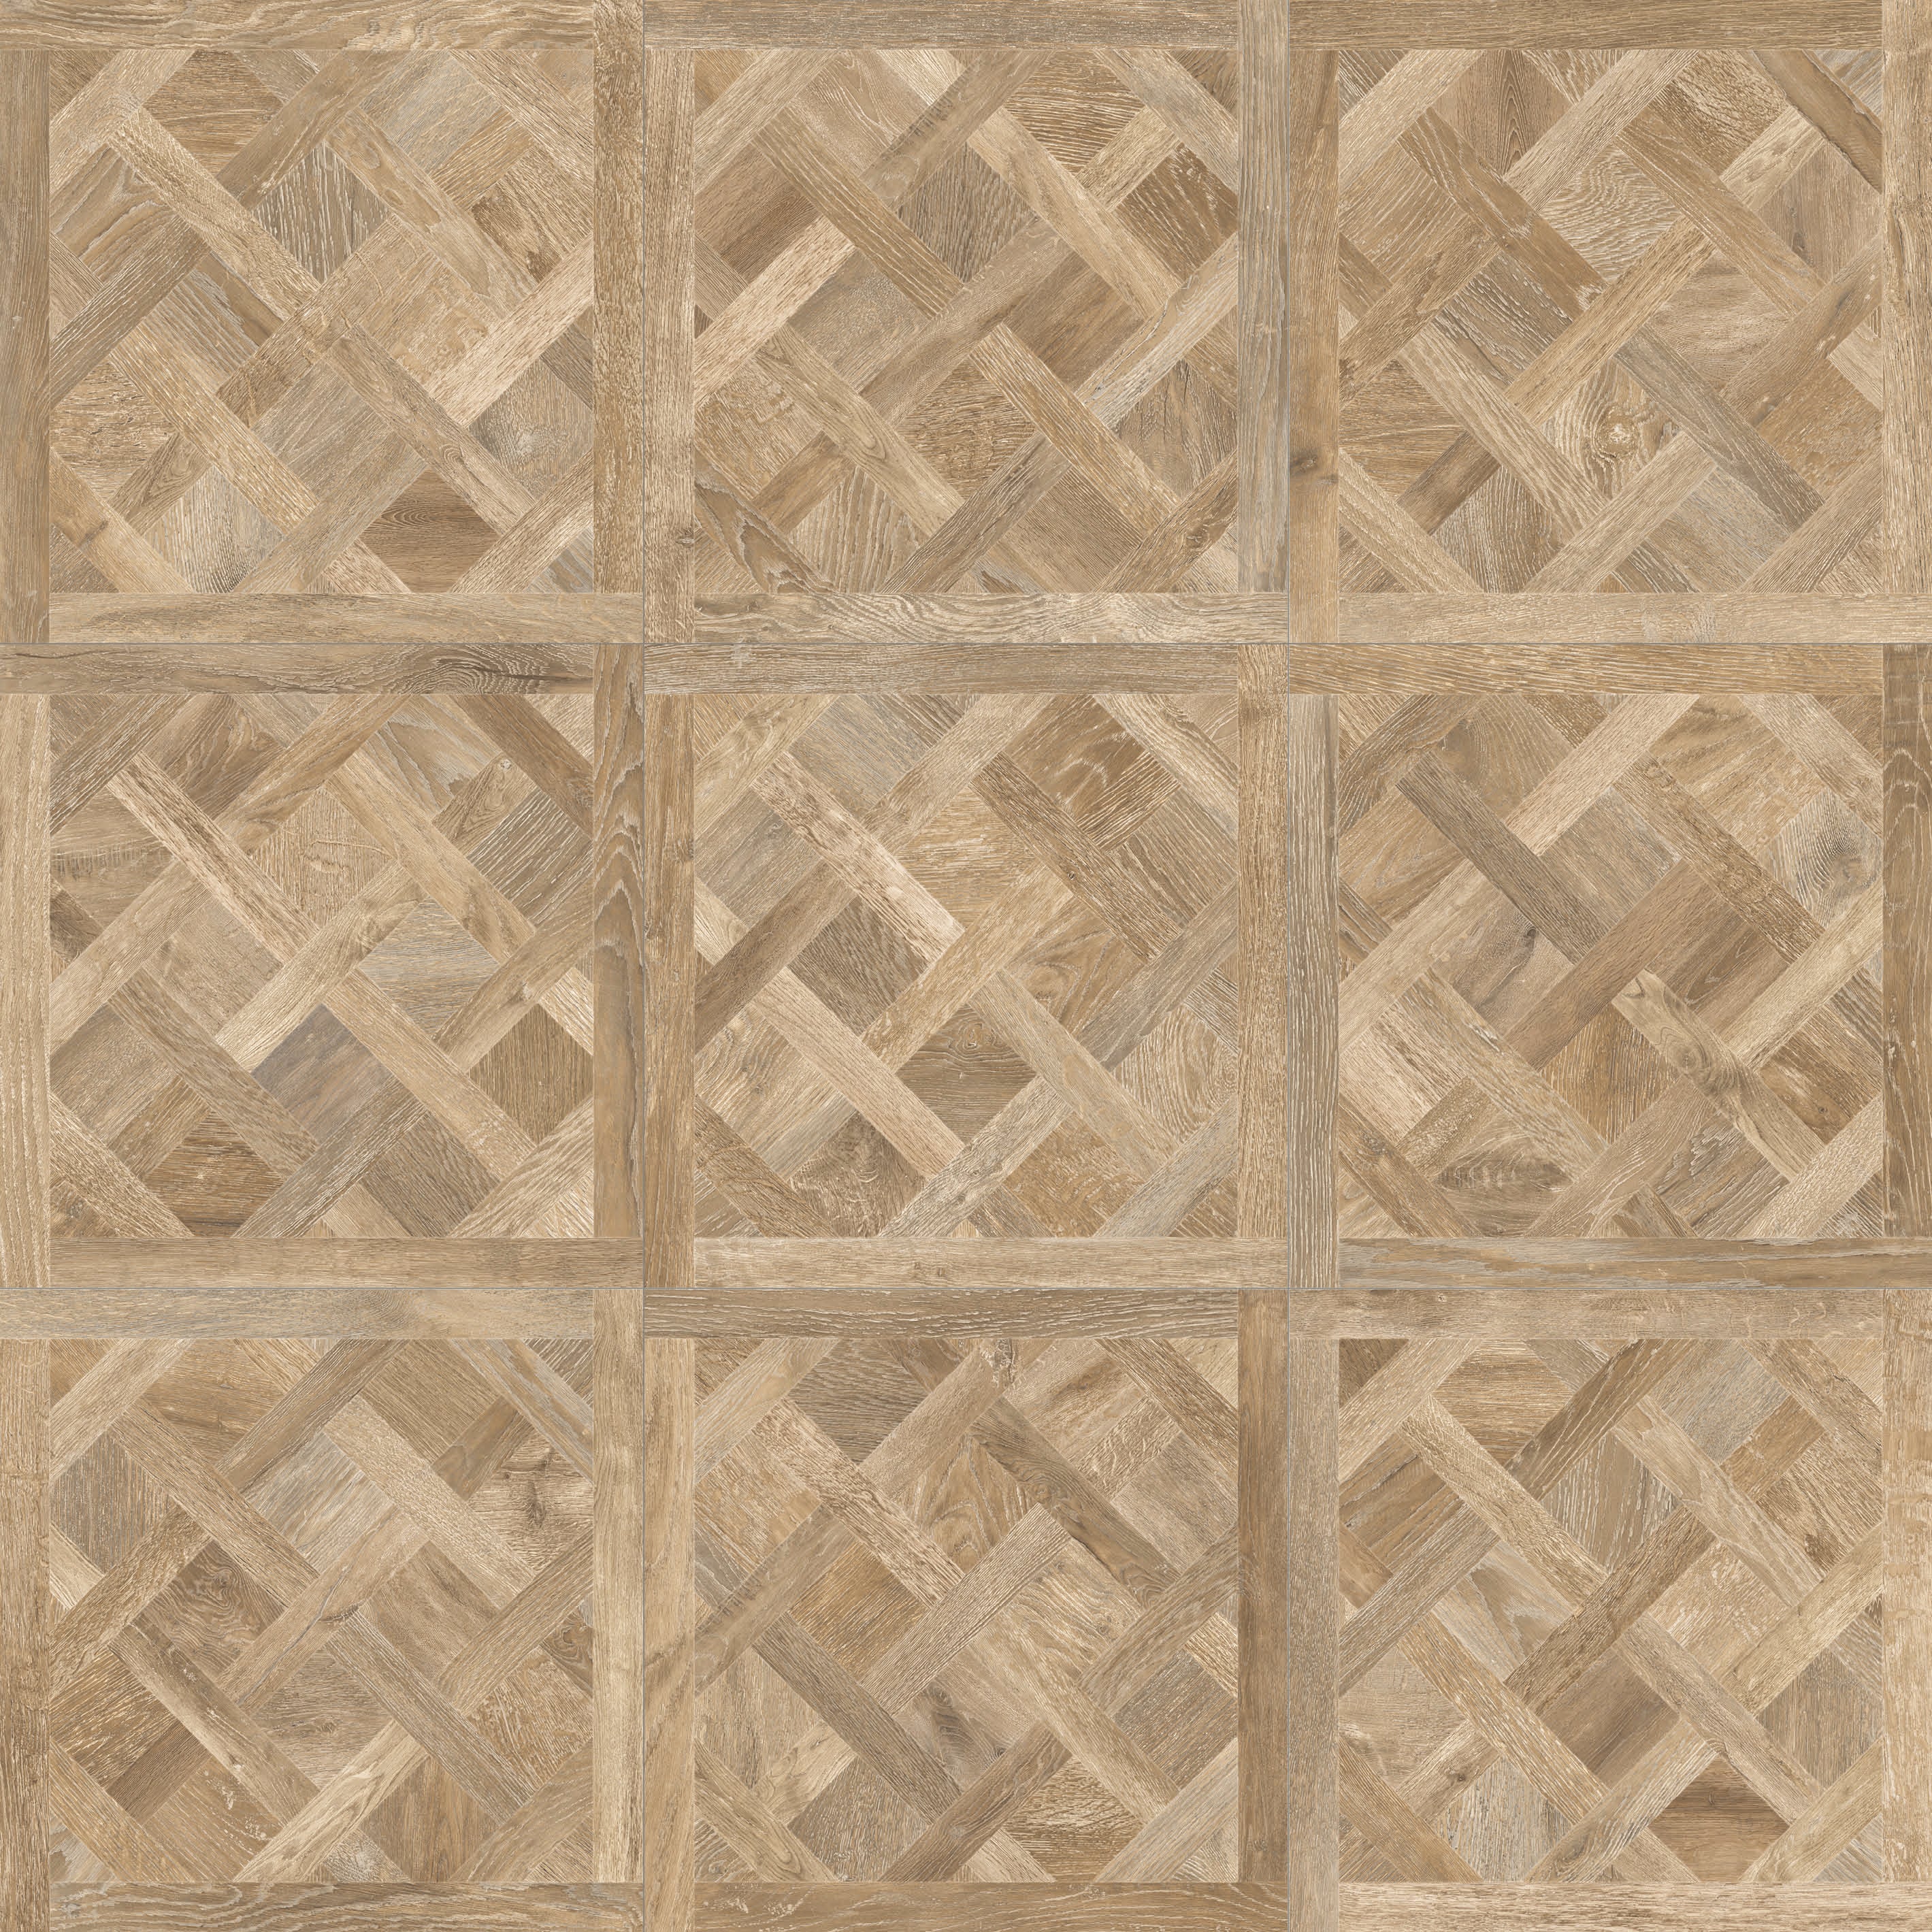 Opus 32x32 Amber Décor Wood Look Porcelain Tile - SAMPLES